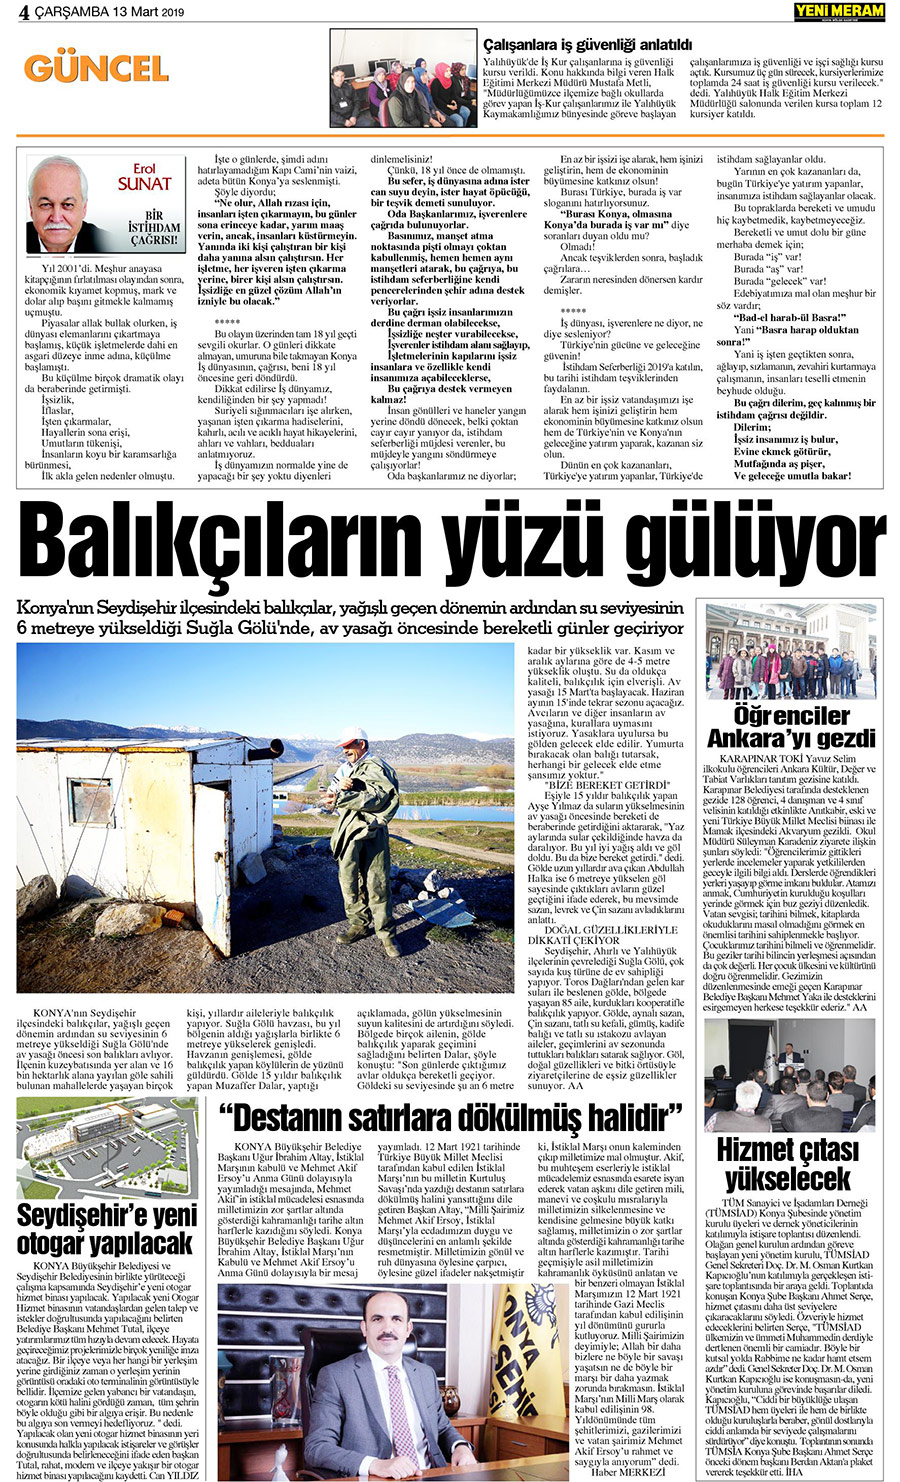 13 Mart 2019 Yeni Meram Gazetesi